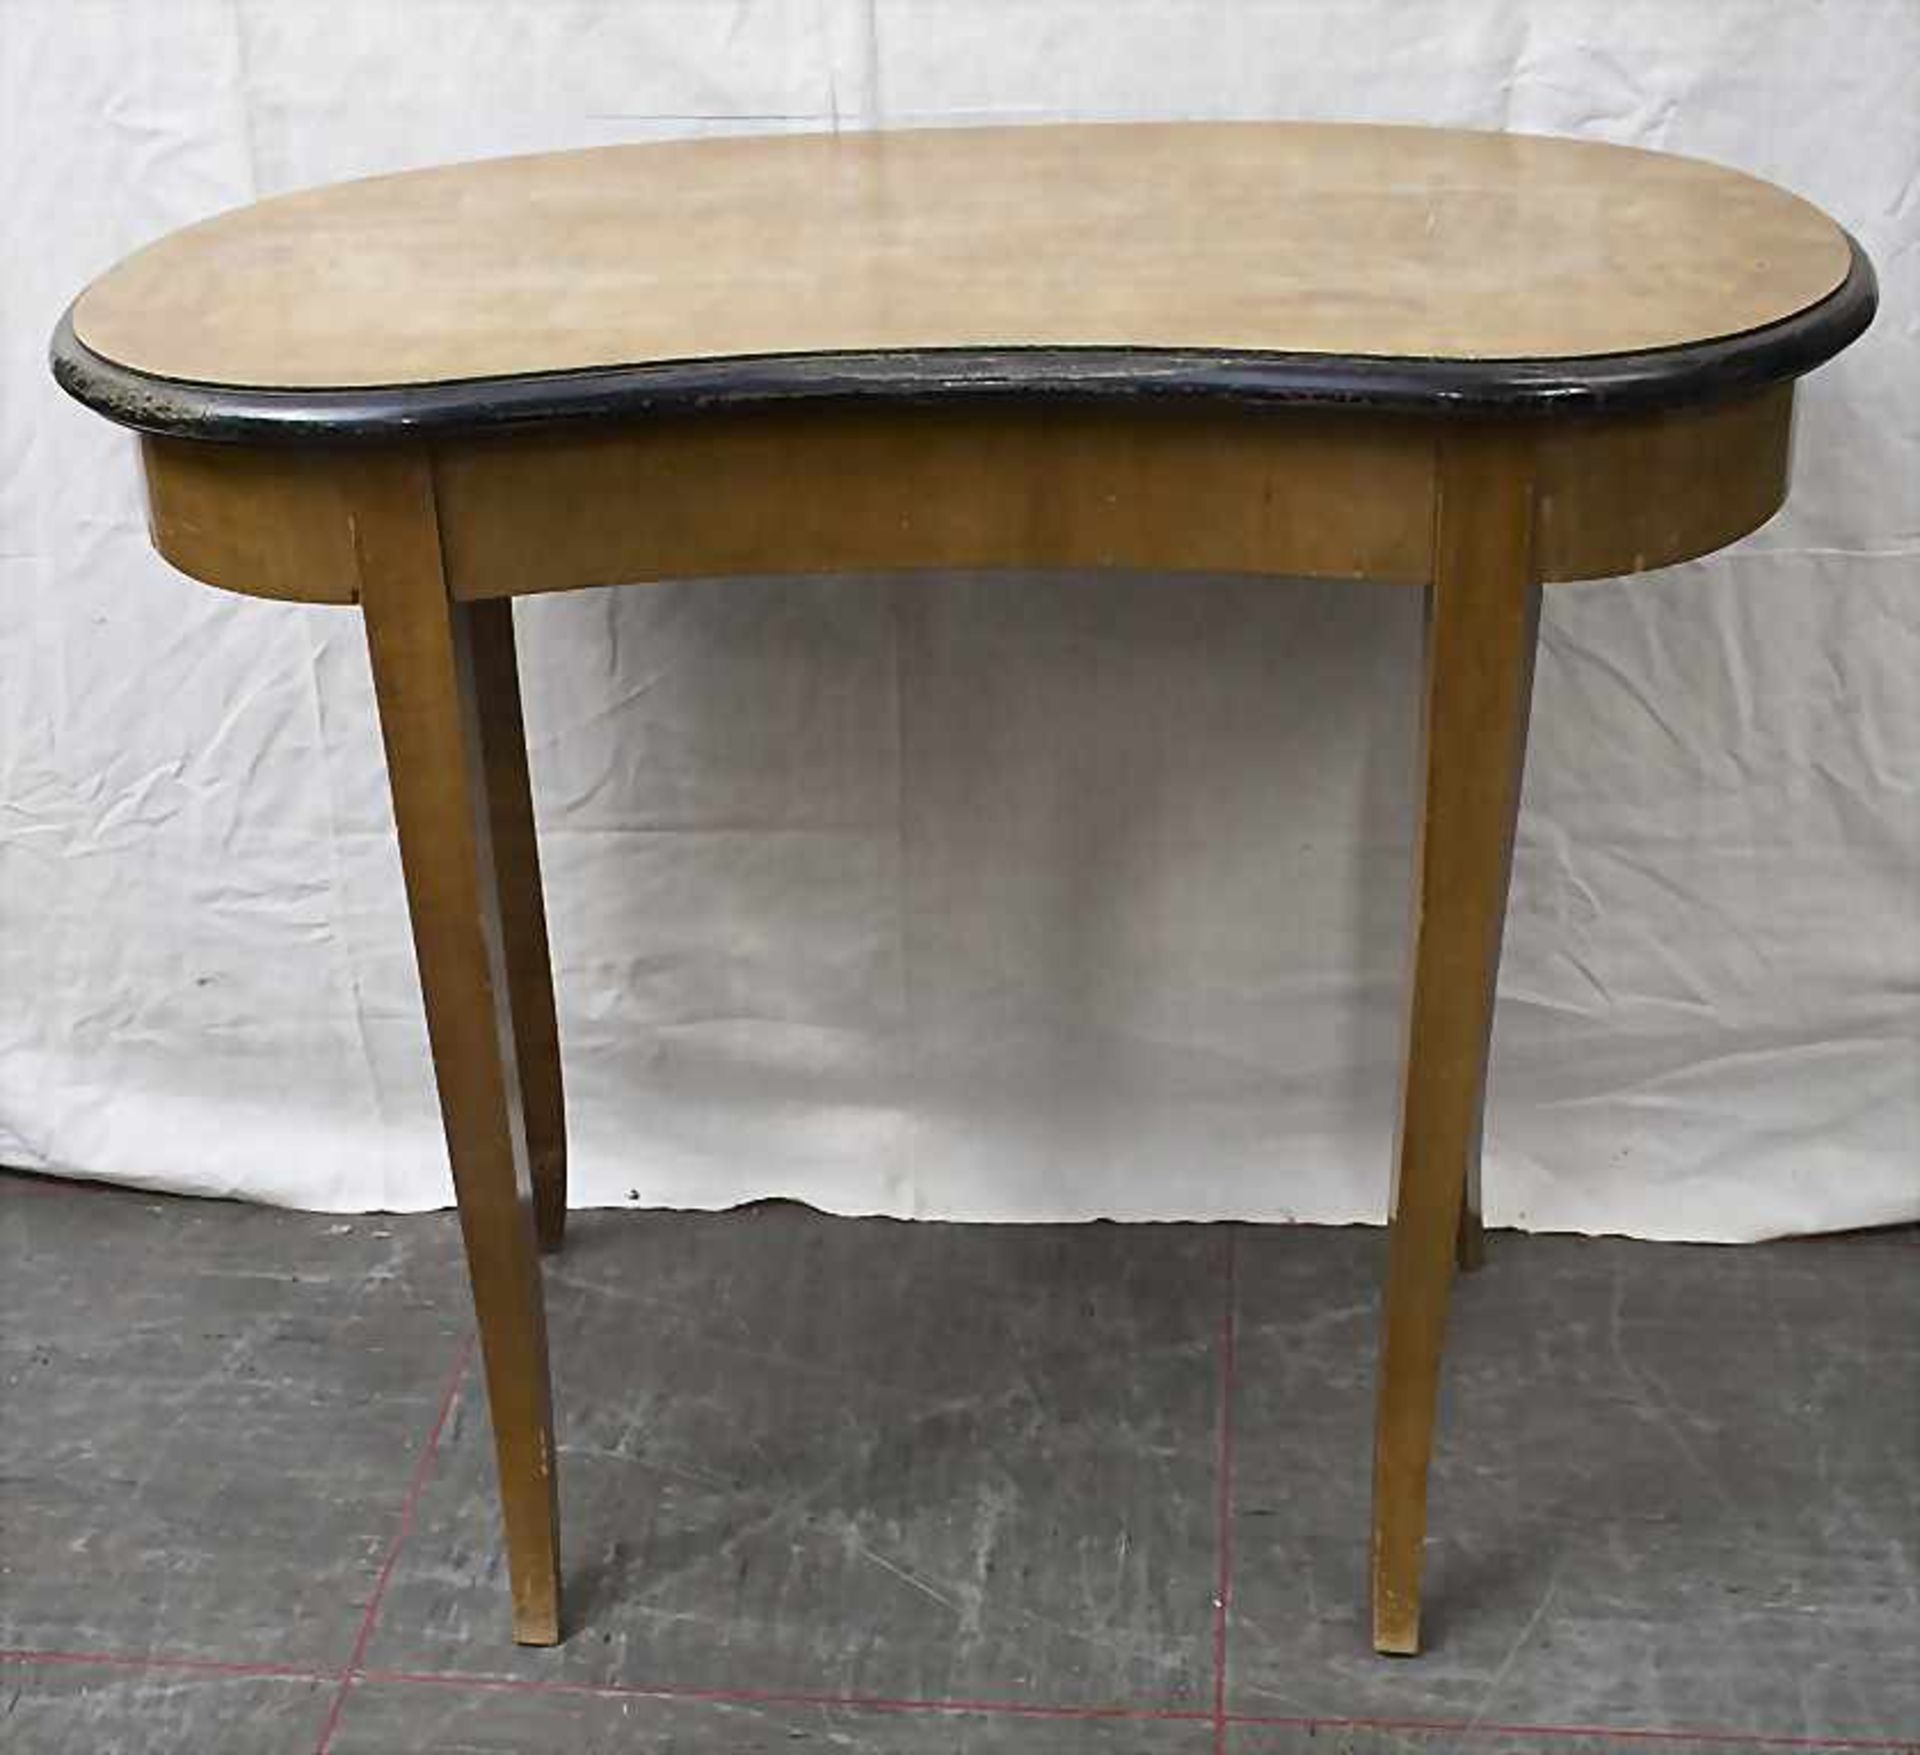 Nierenförmiger Tisch / A kidney-shaped table, 19. Jh.Material: Holz, poliert, ebonisierter